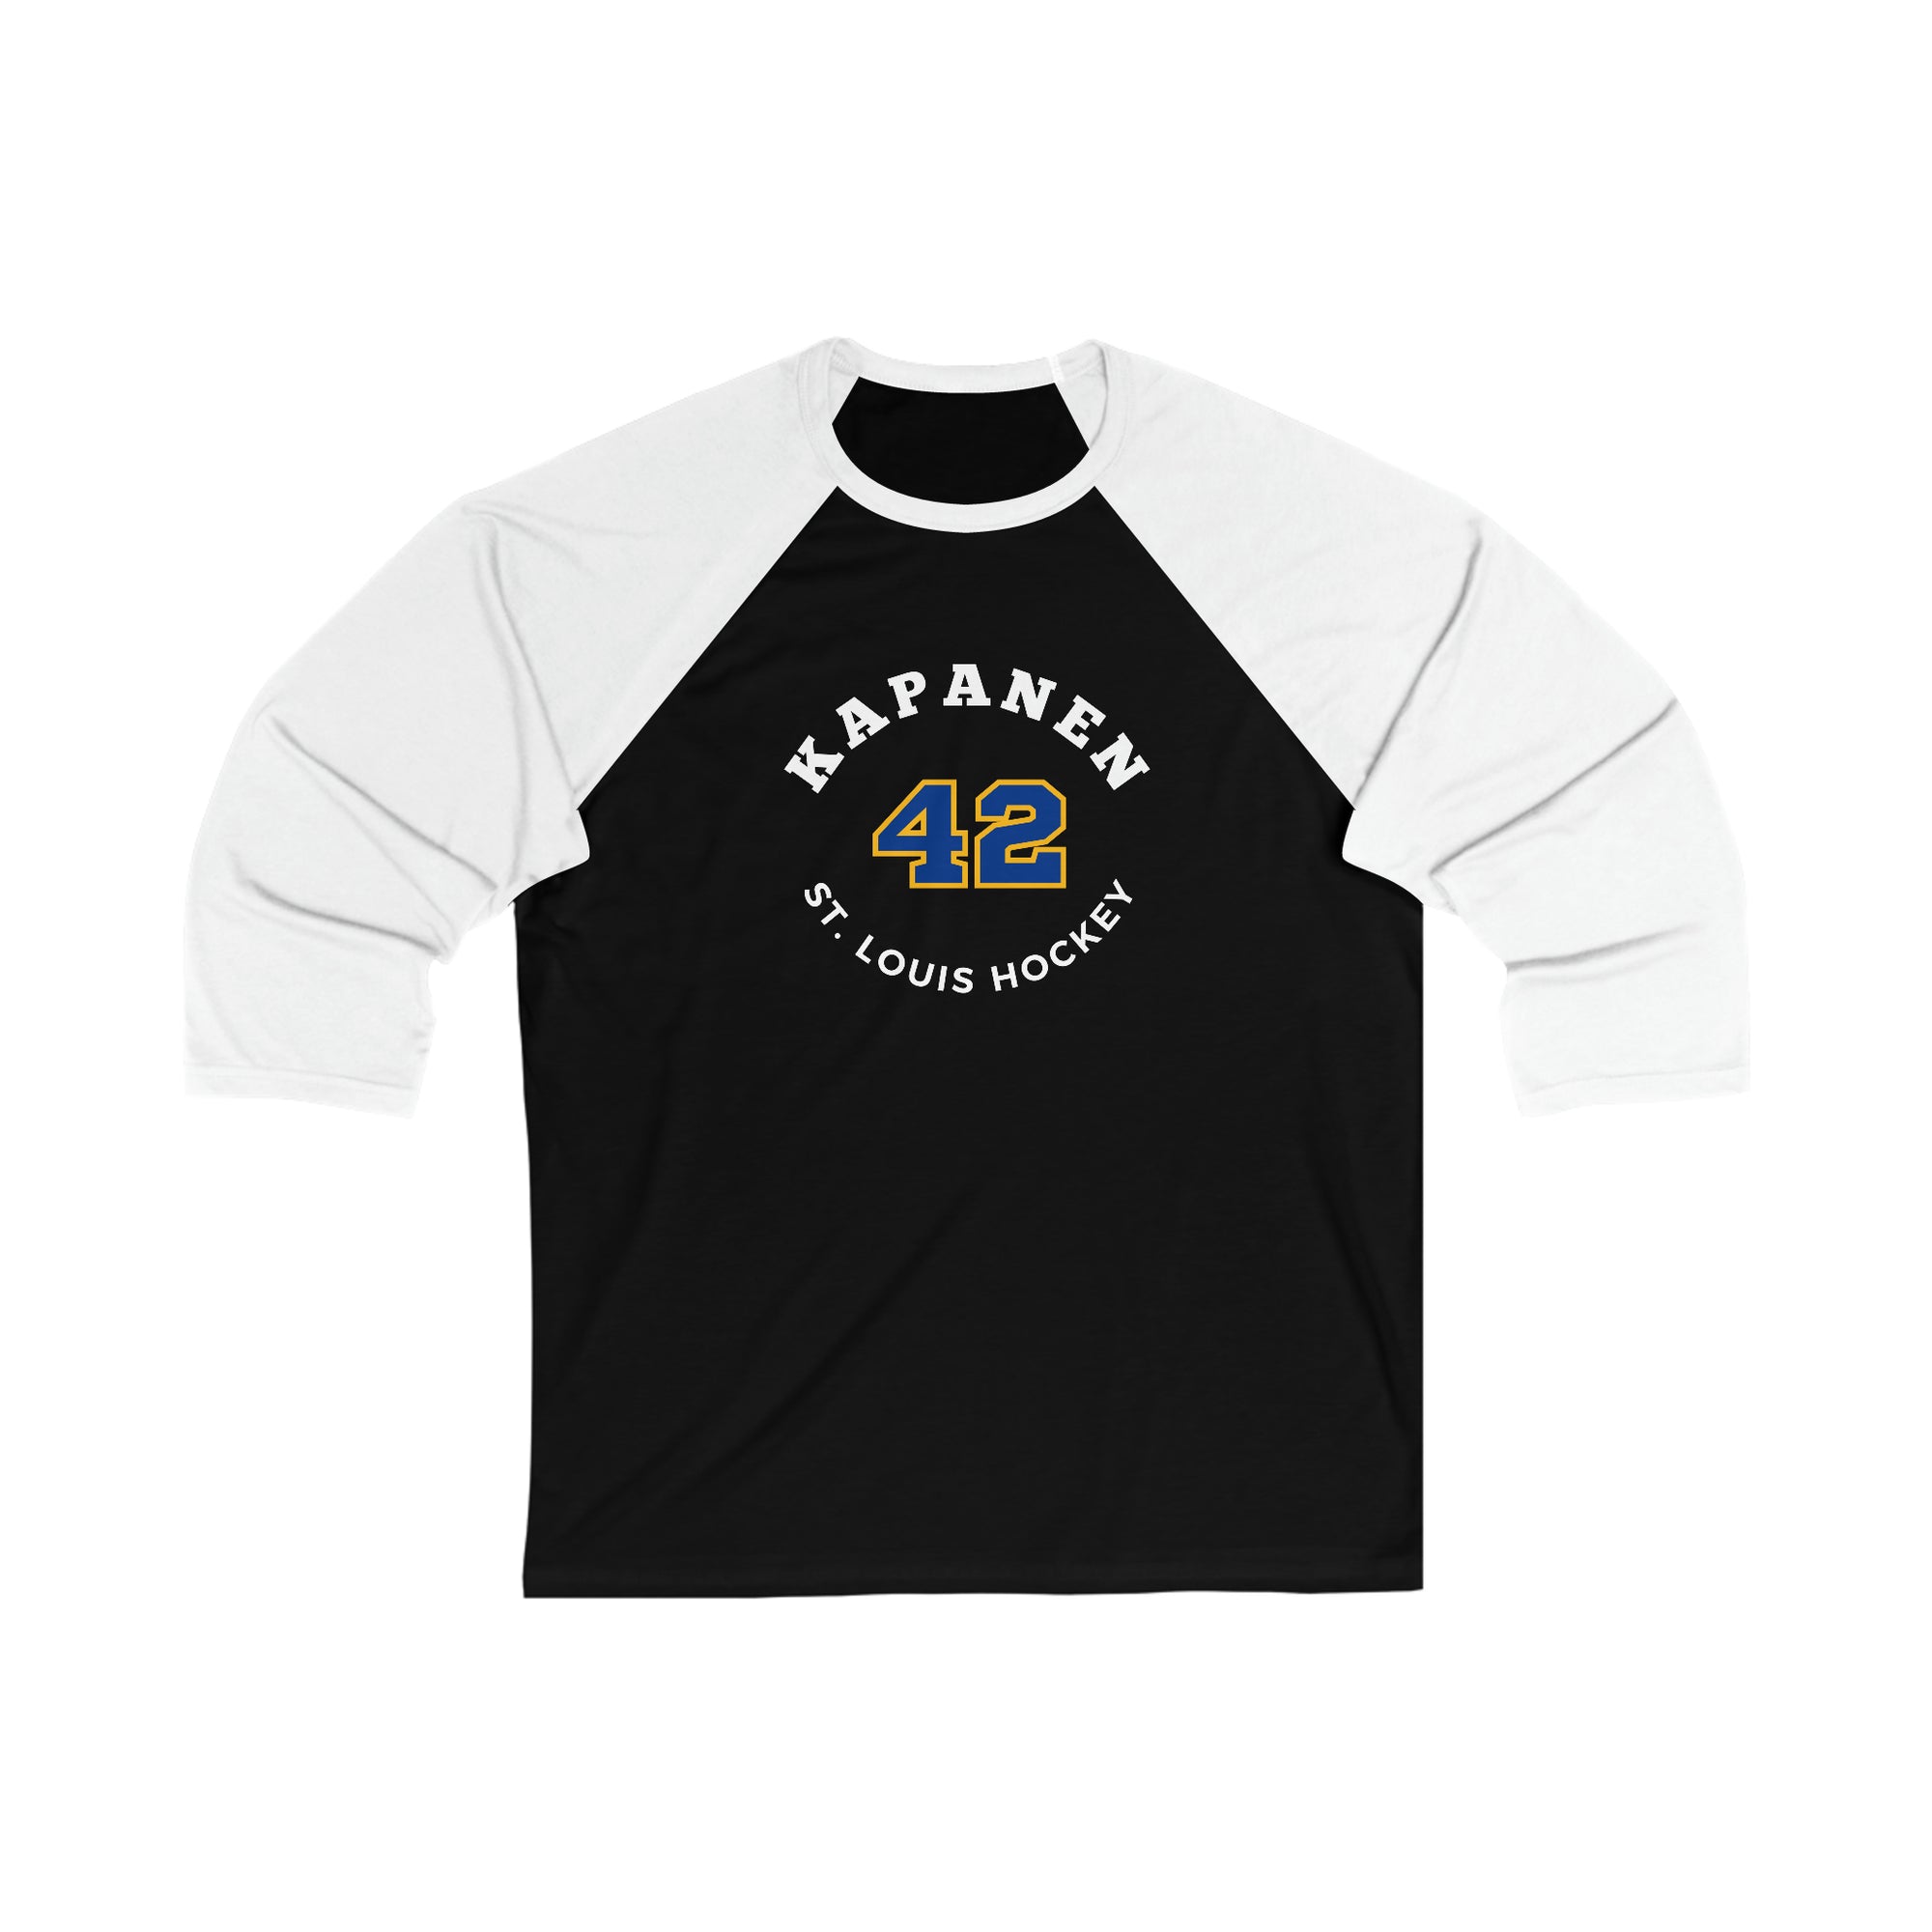 Kapanen 42 St. Louis Hockey Number Arch Design Unisex Tri-Blend 3/4 Sleeve Raglan Baseball Shirt